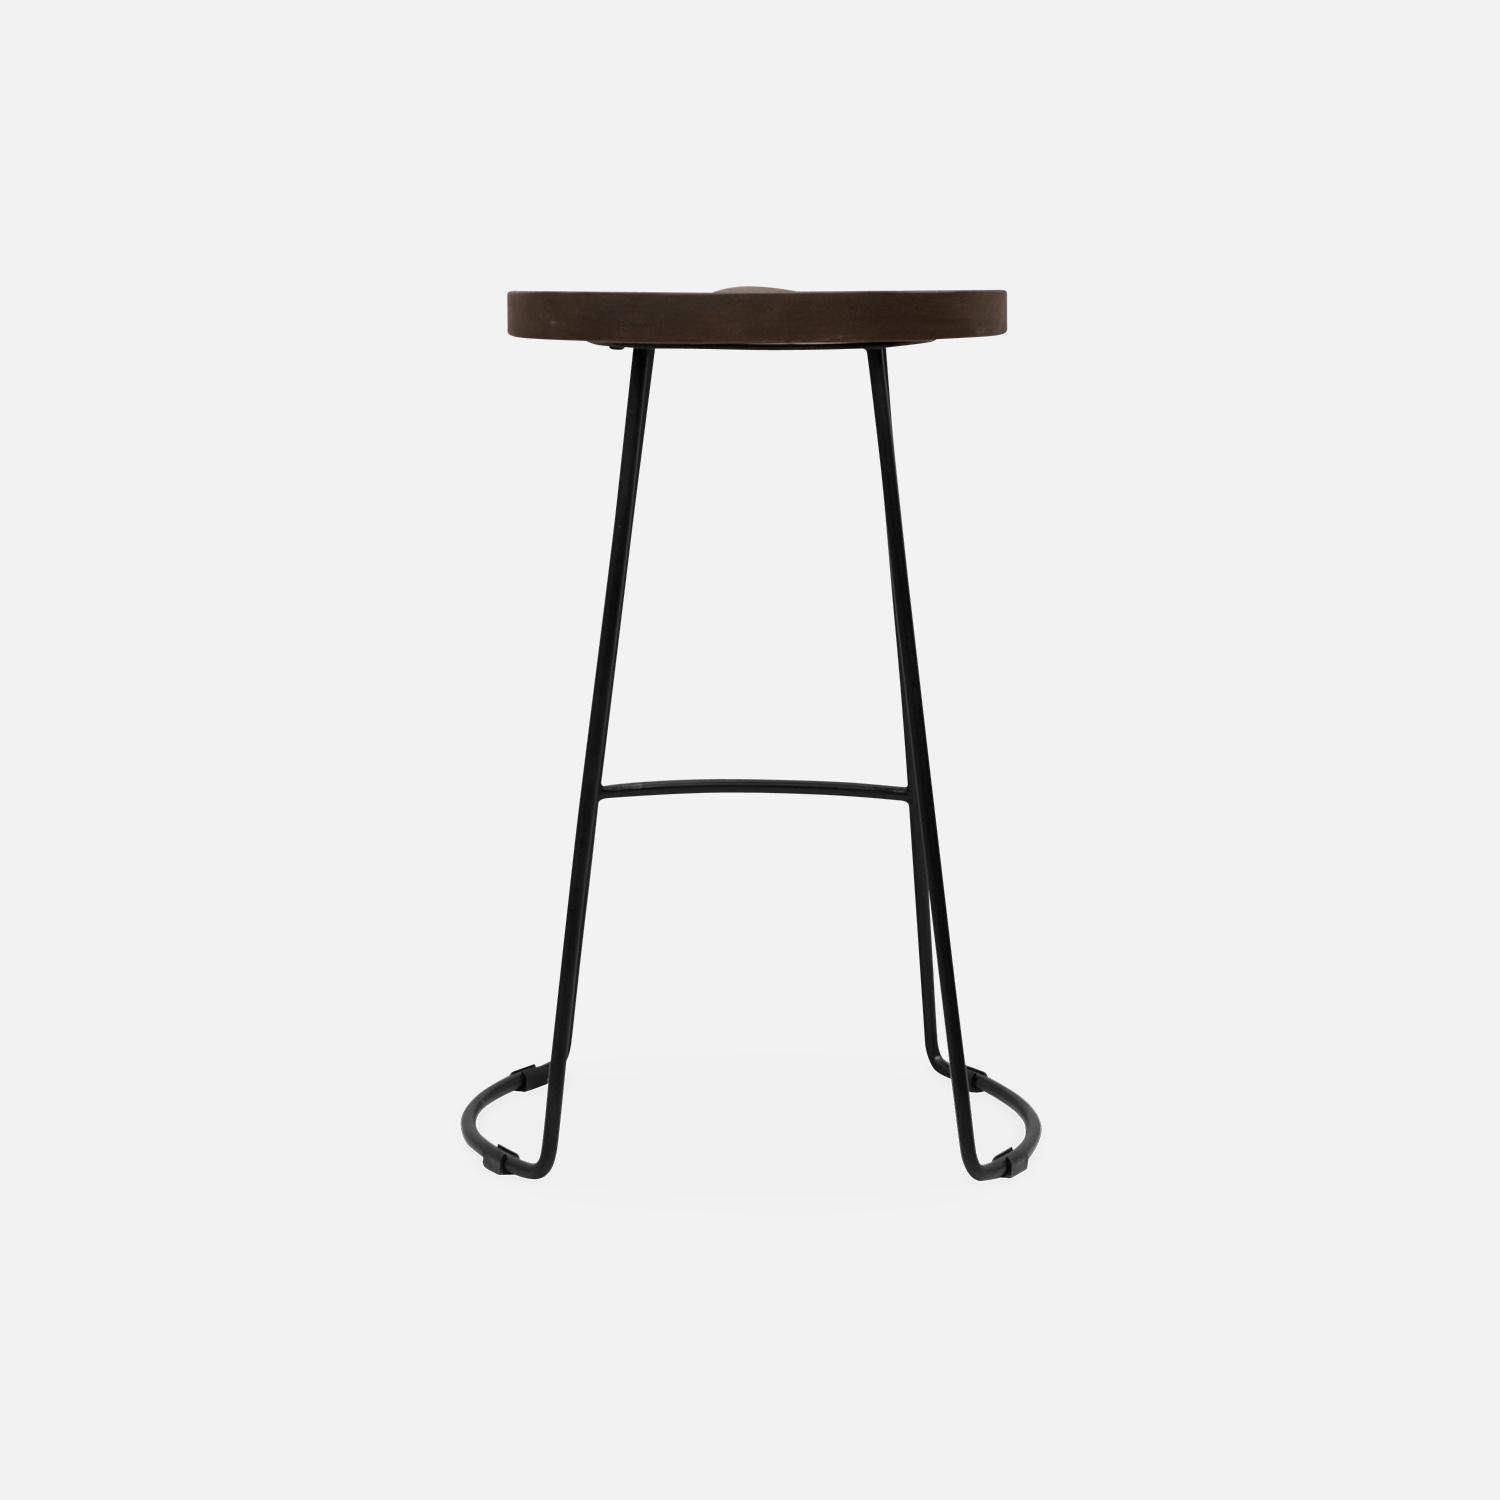 Set of 4 industrial metal and wooden bar stools, 44x36x65cm, Jaya, Light Walnut, Mango wood seat, black metal legs Photo7